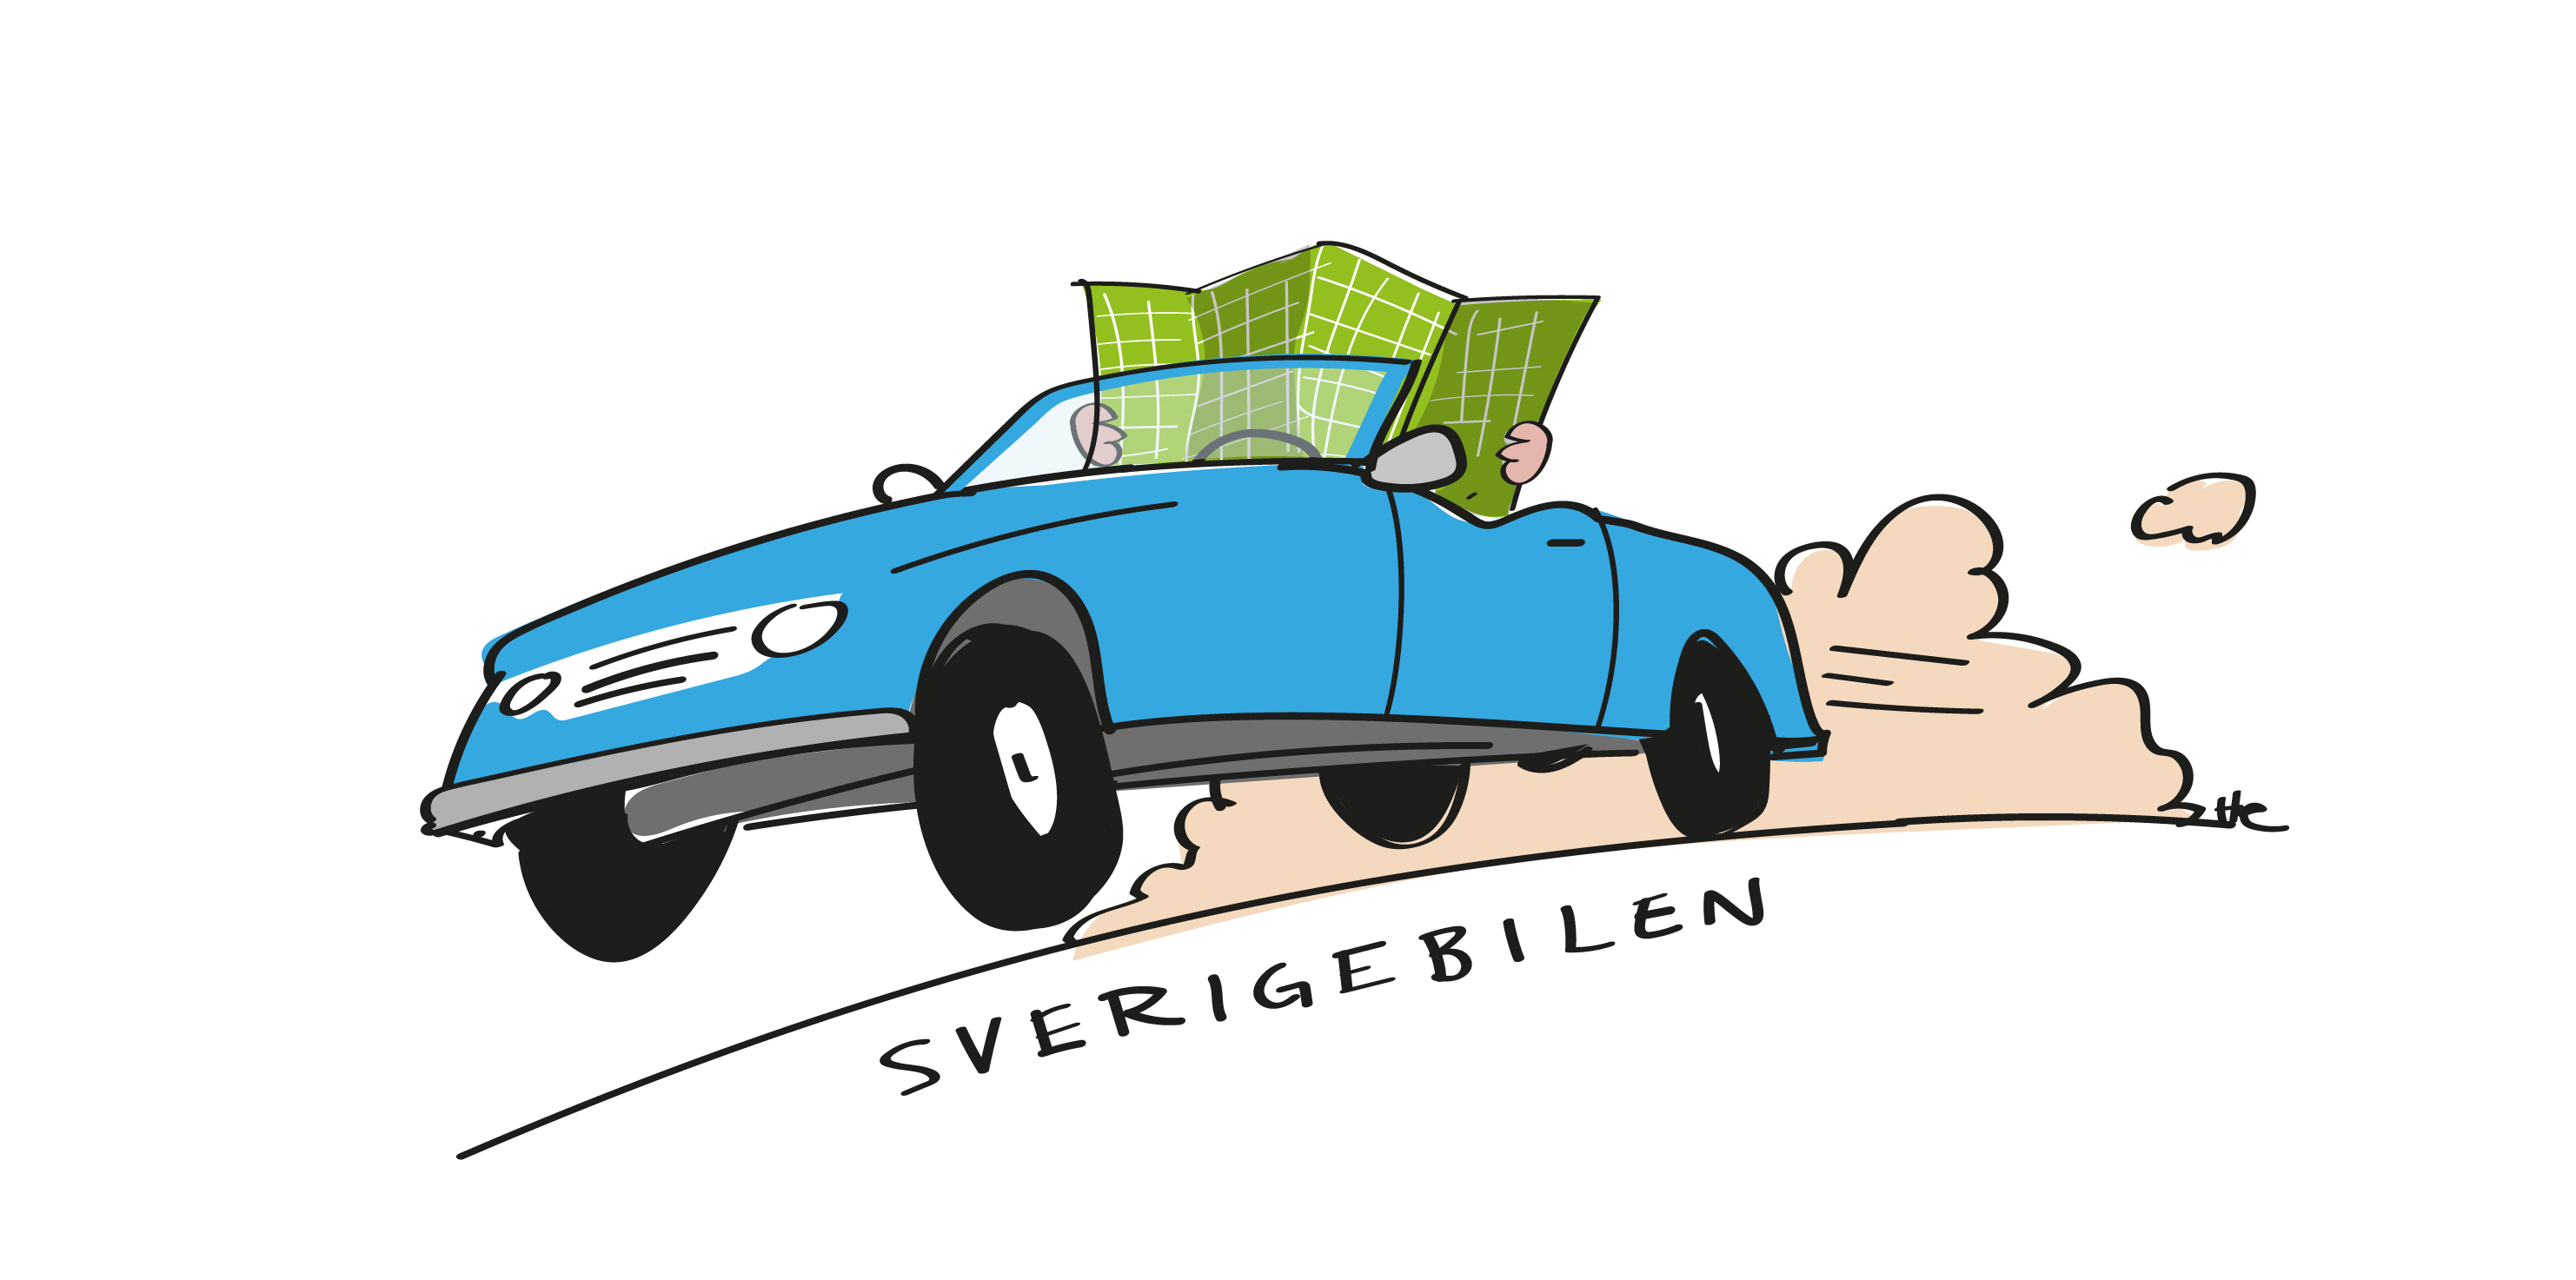 Sverigebilen